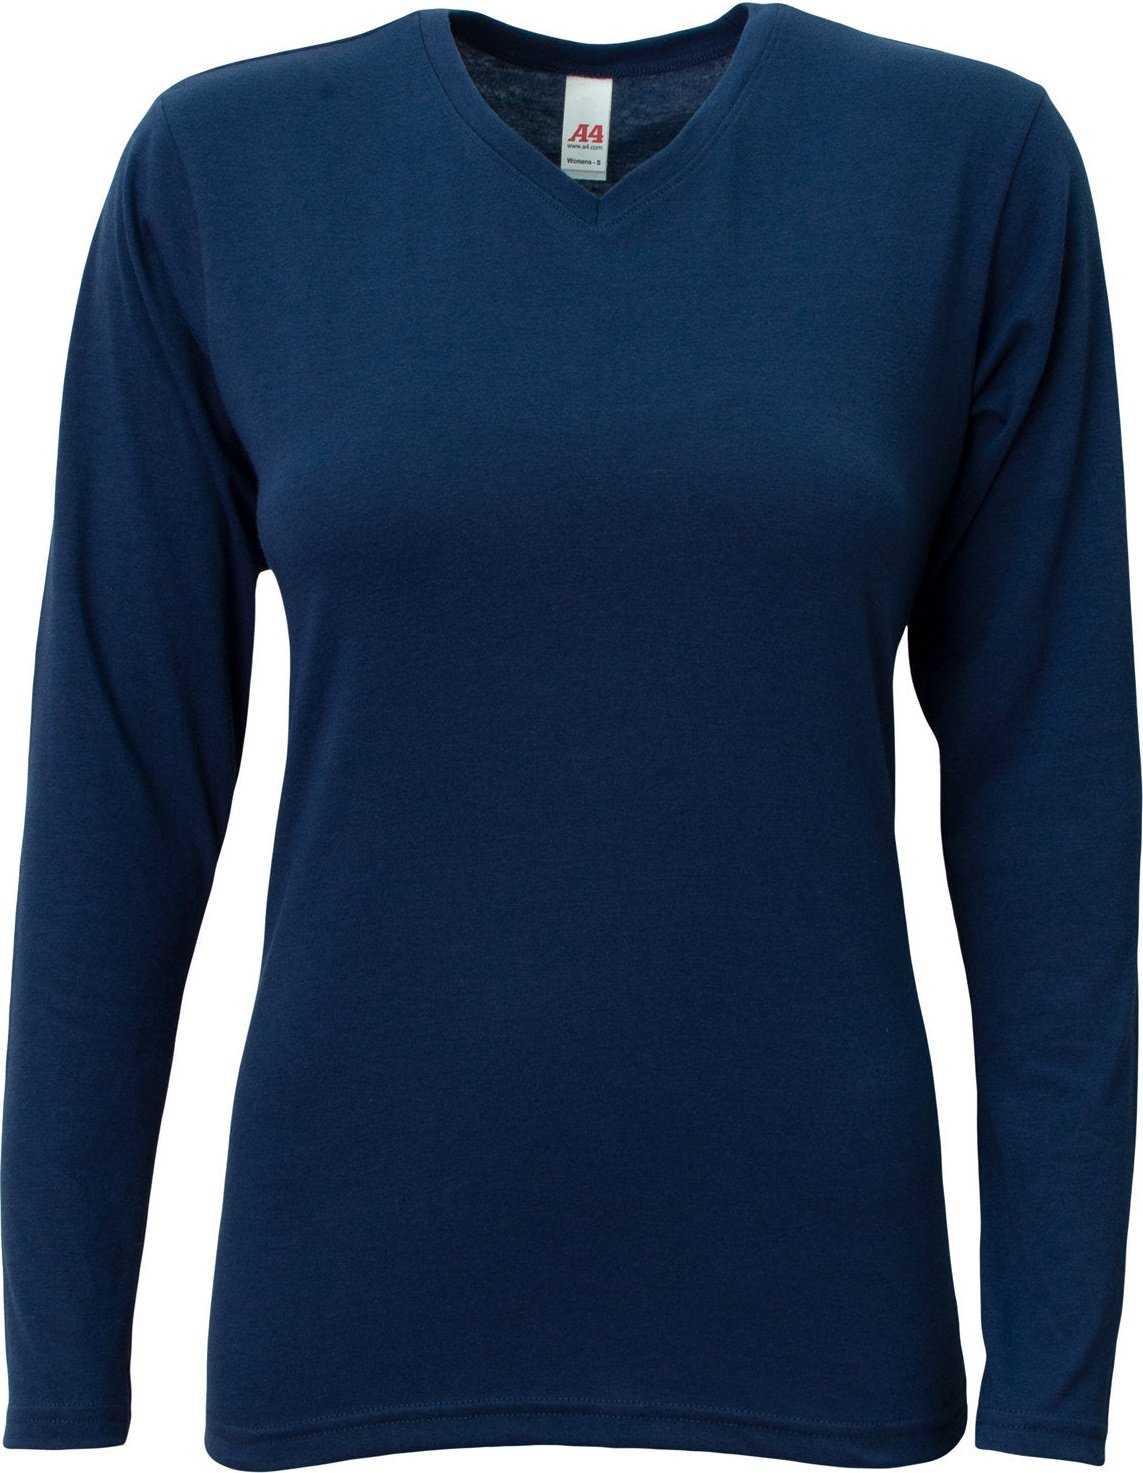 A4 NW3029 Ladies' Long-Sleeve Softek V-Neck T-Shirt - NAVY - HIT a Double - 2